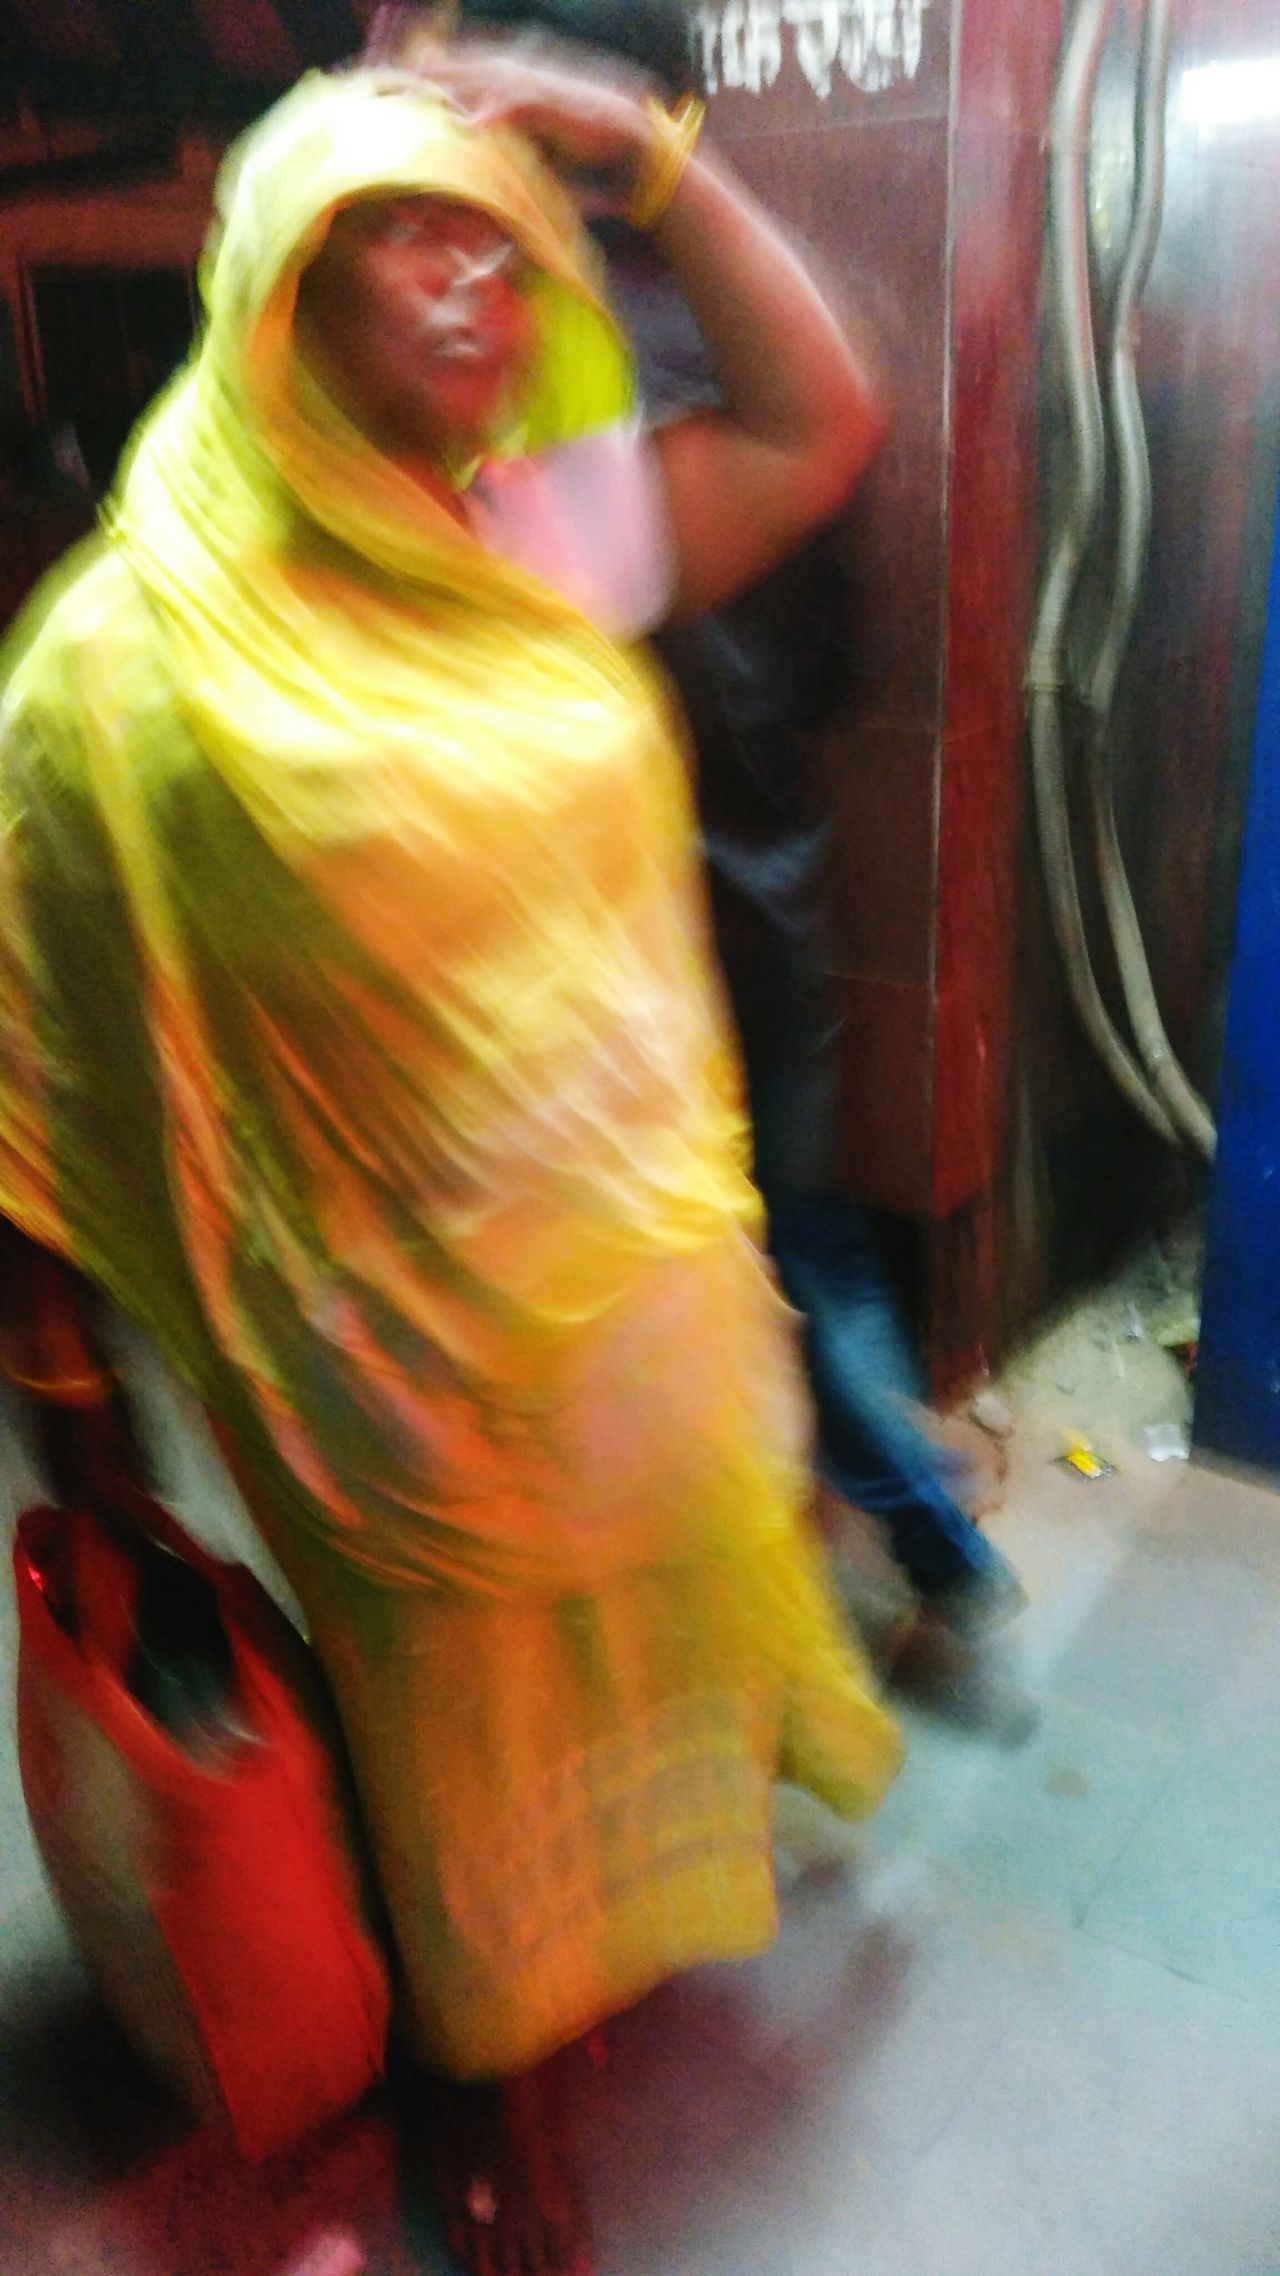 A Traditional Hindi Spoken woman